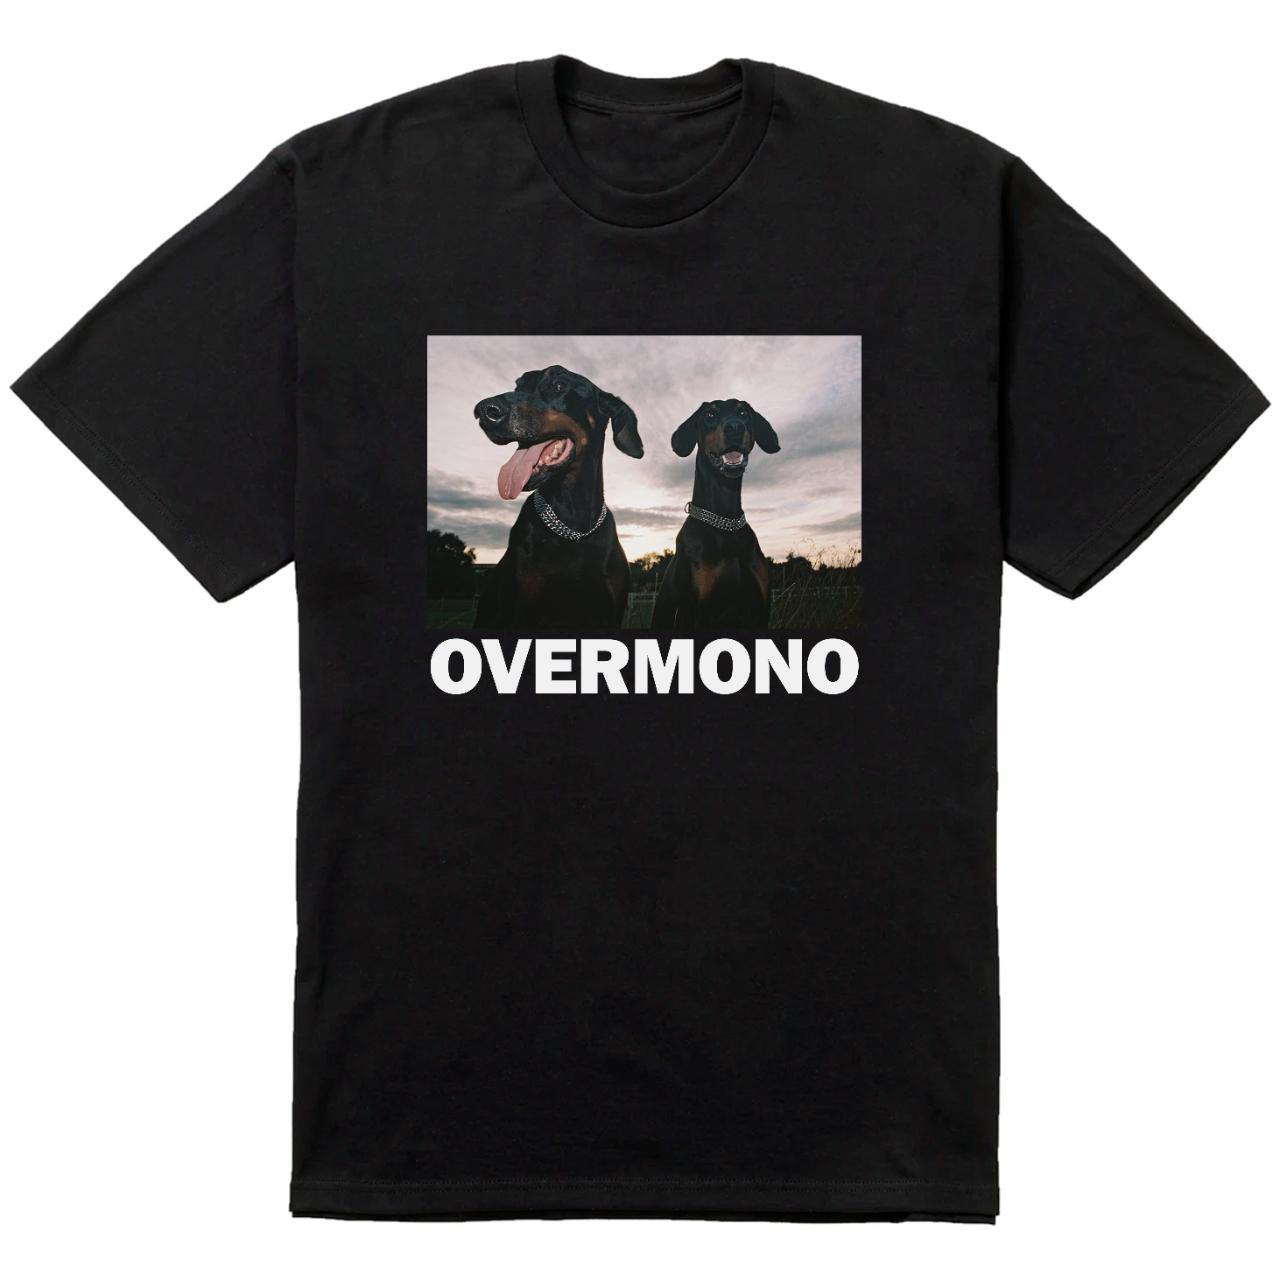 Overmono T Shirt, Sizes S-XXL available, Black t...